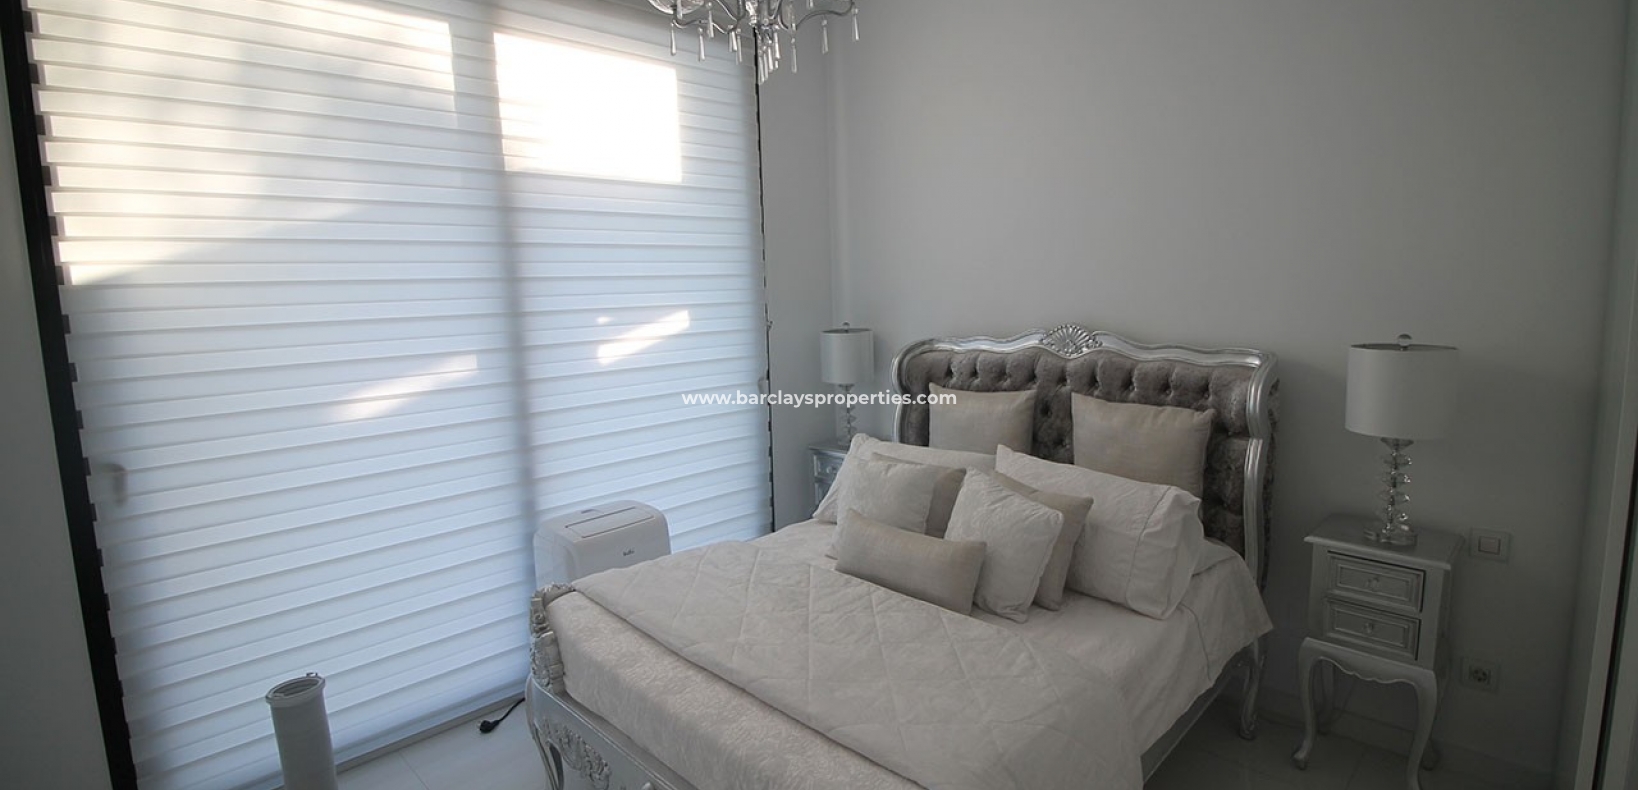 Bedroom - Modern villa for sale in urbanisation La Marina